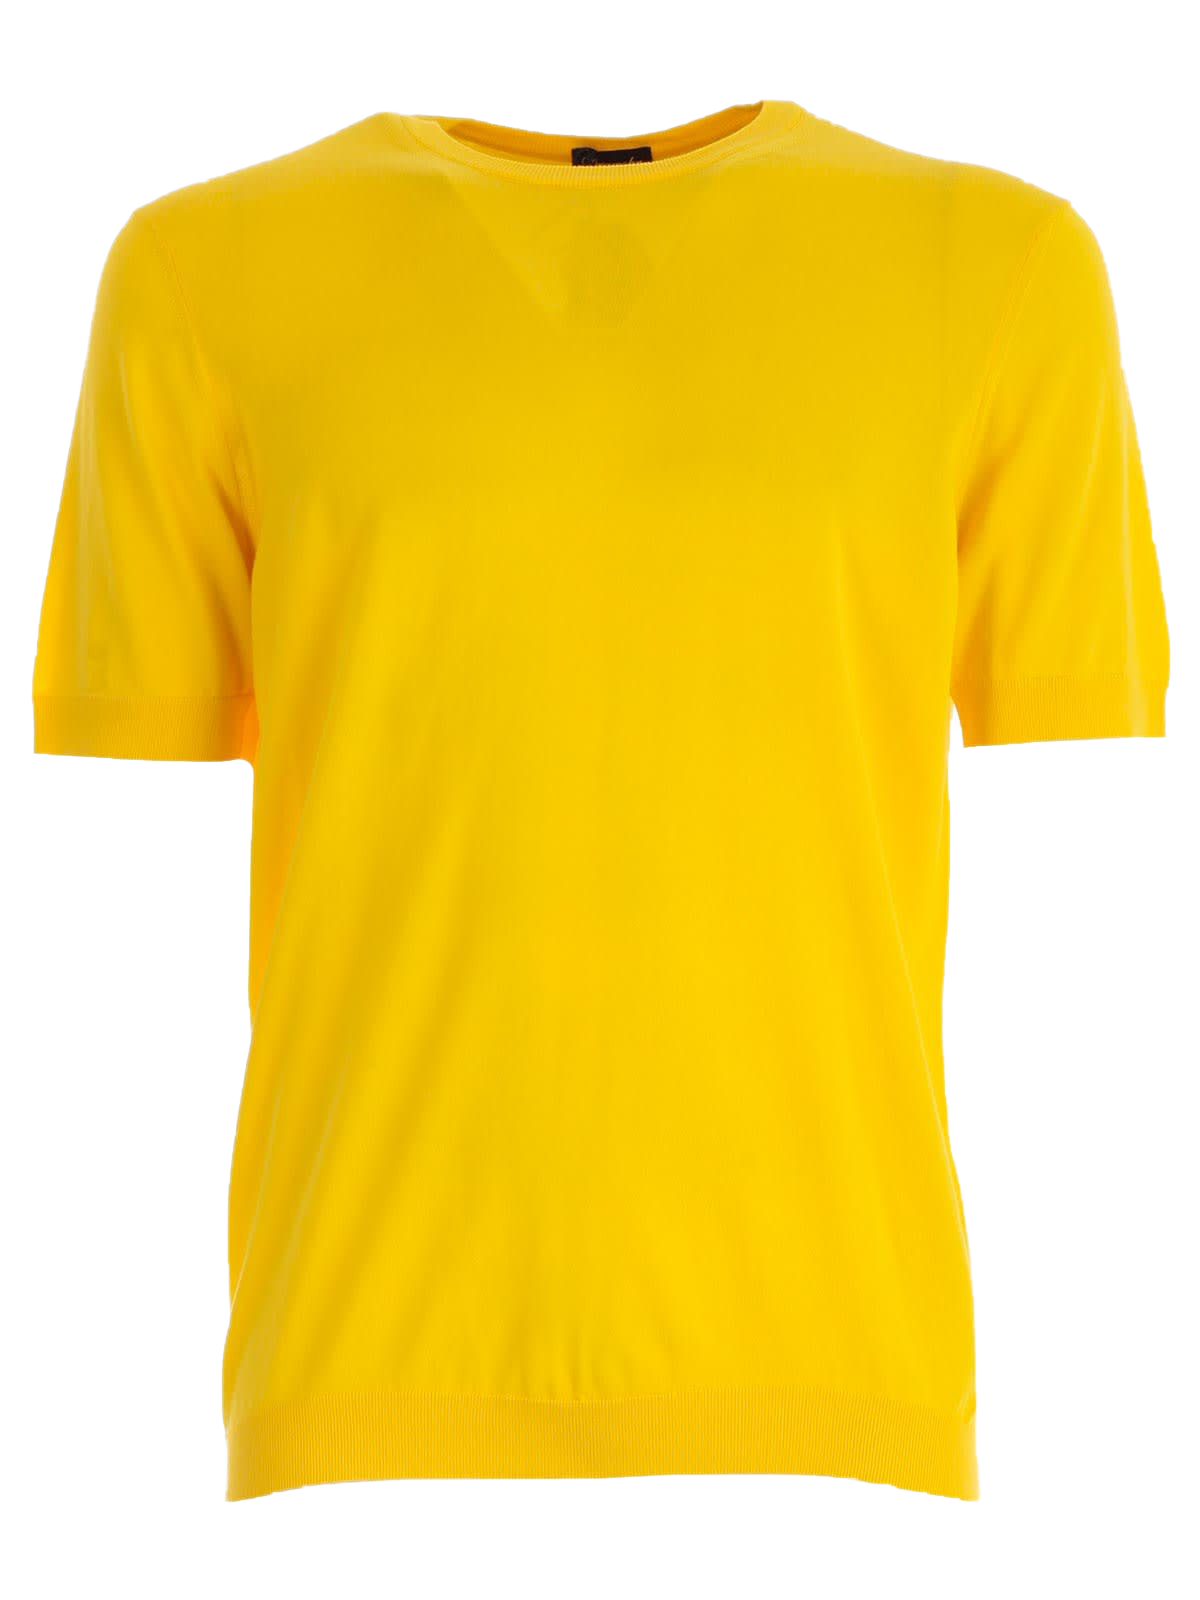 T-shirt amarelo simples imagem PNG